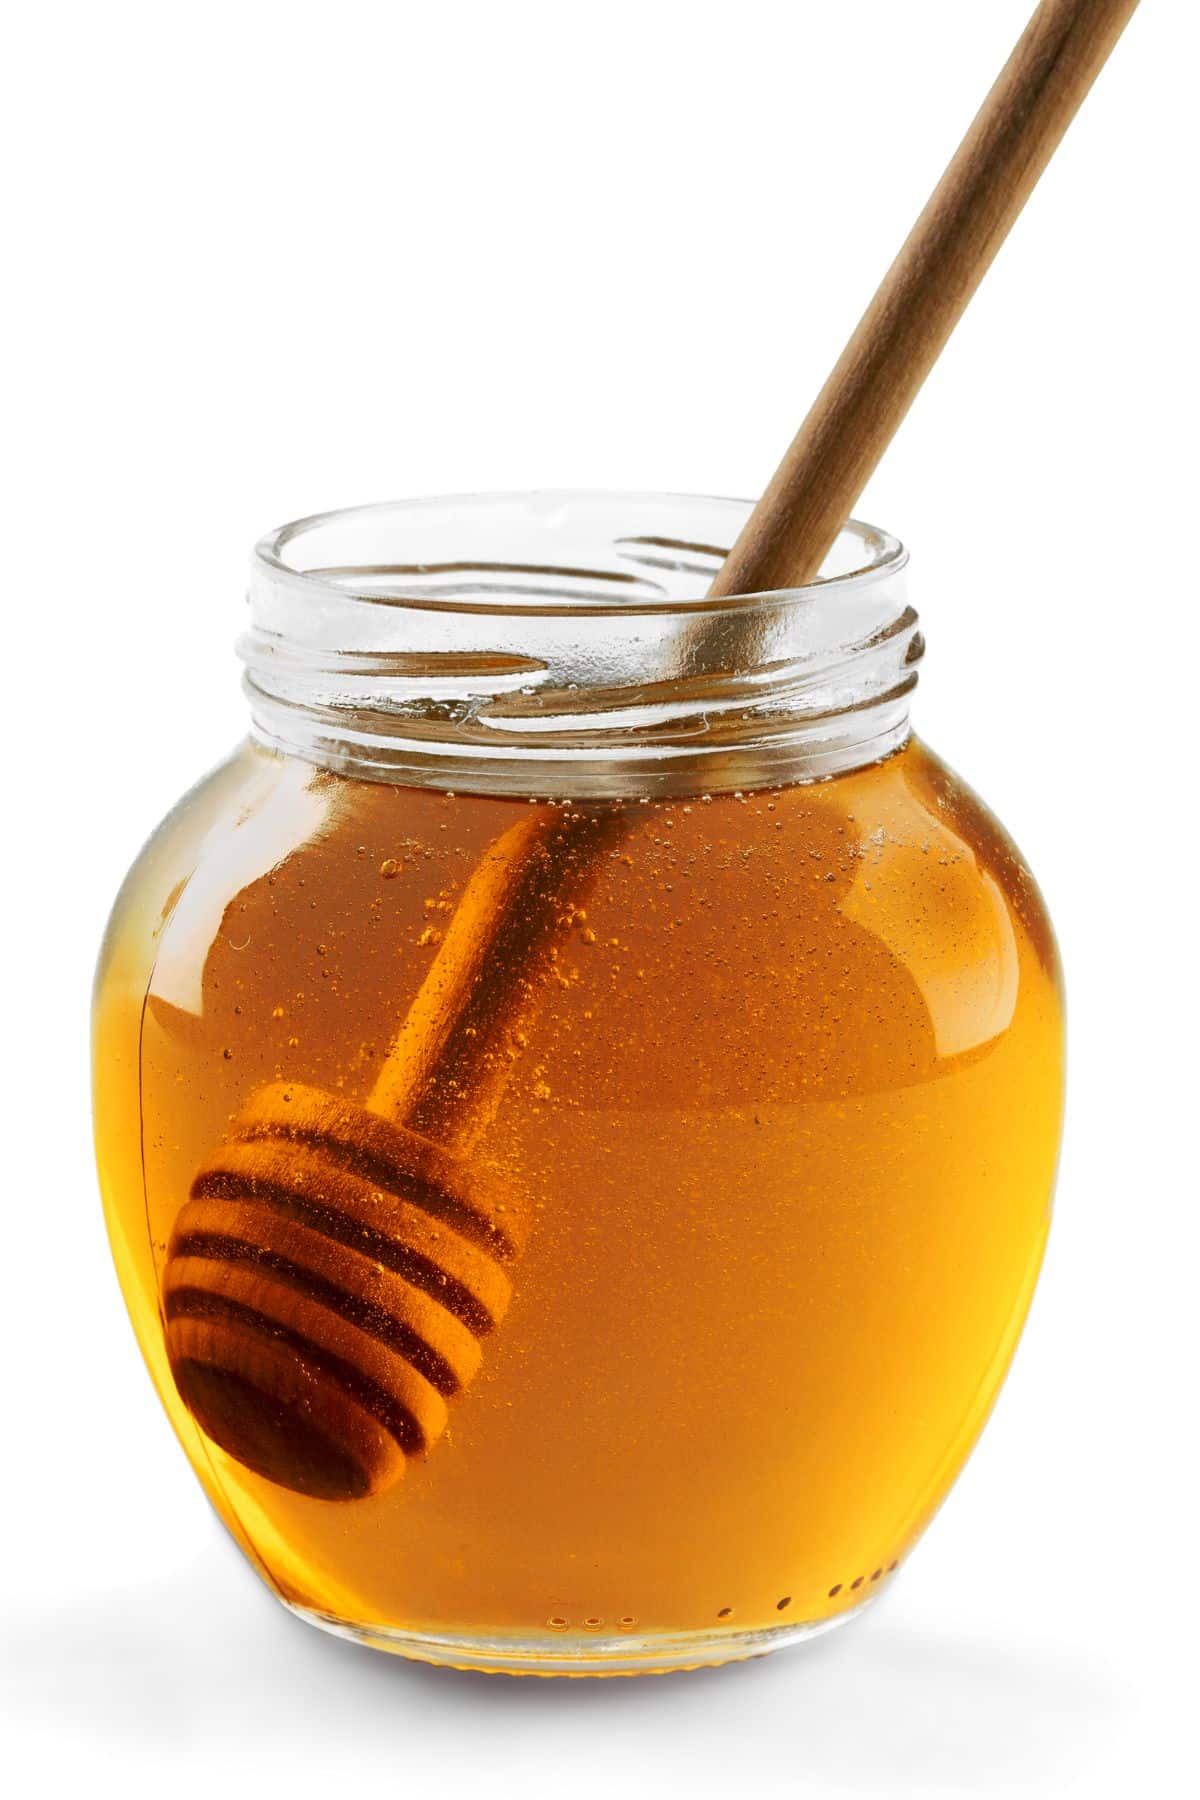 Bottle of honey with wooden honey stirrer and white background.